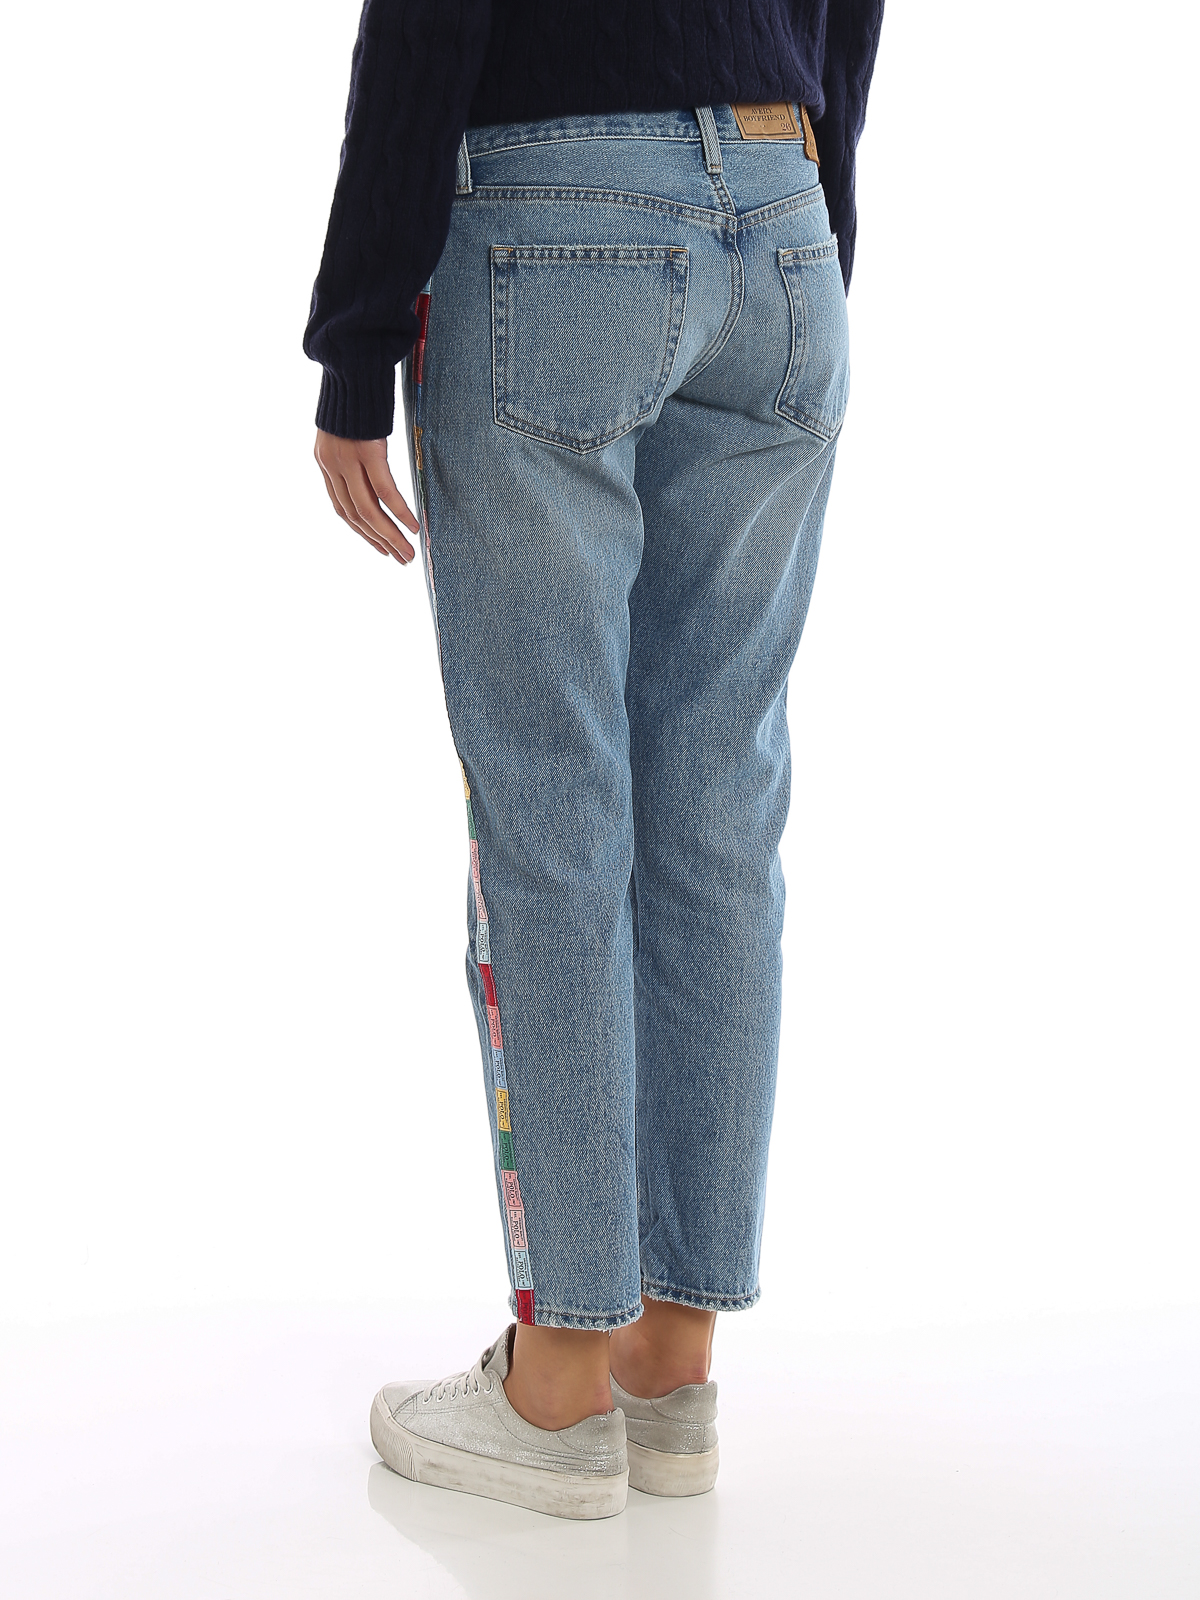 ralph lauren jeans outlet online